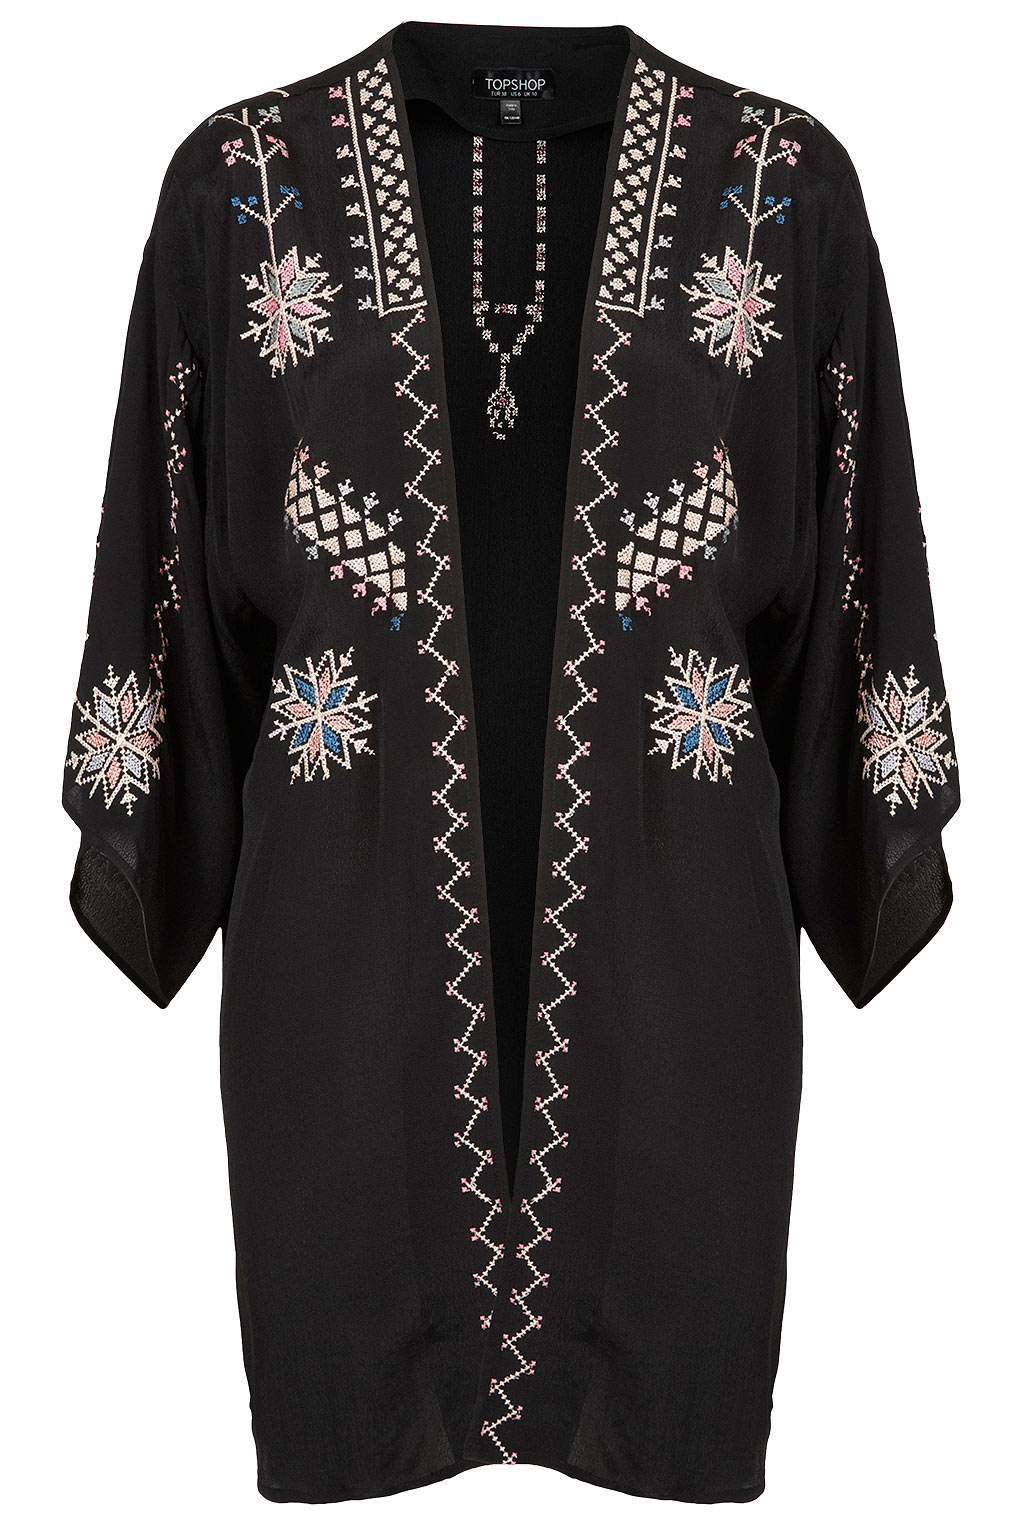 Lyst - Topshop Aztec Embroidered Kimono in Black